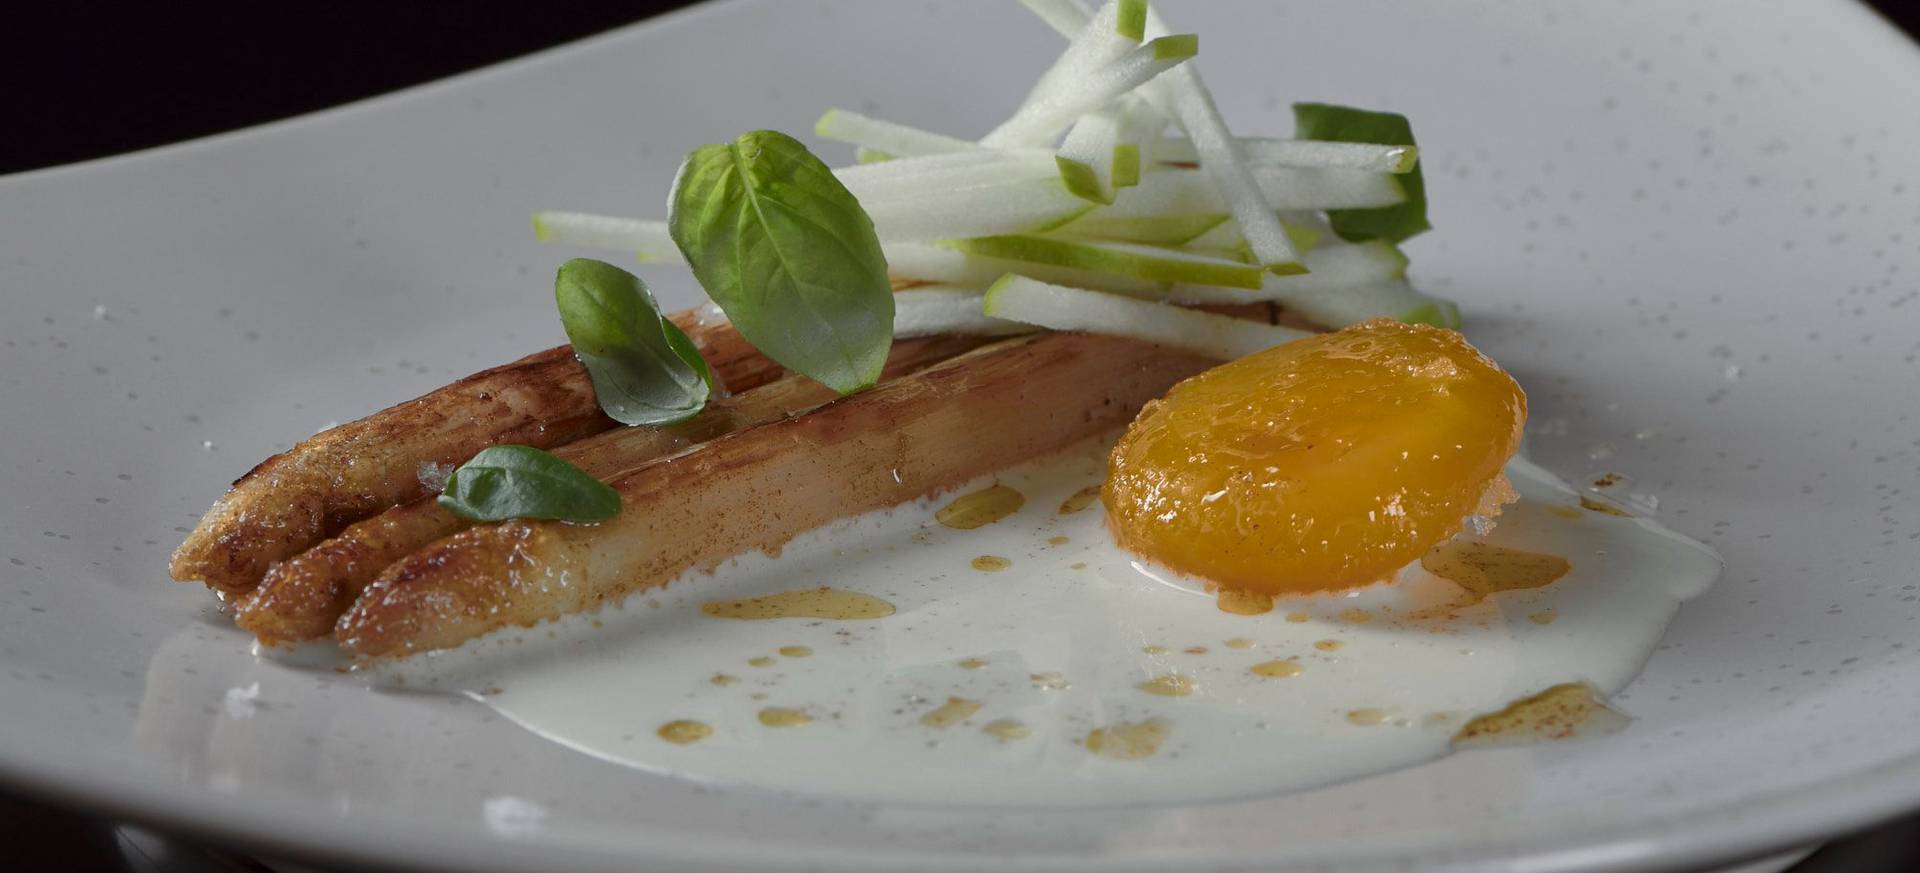 Roasted White Asparagus with Cured Egg Yolk, Basil & Green Apple